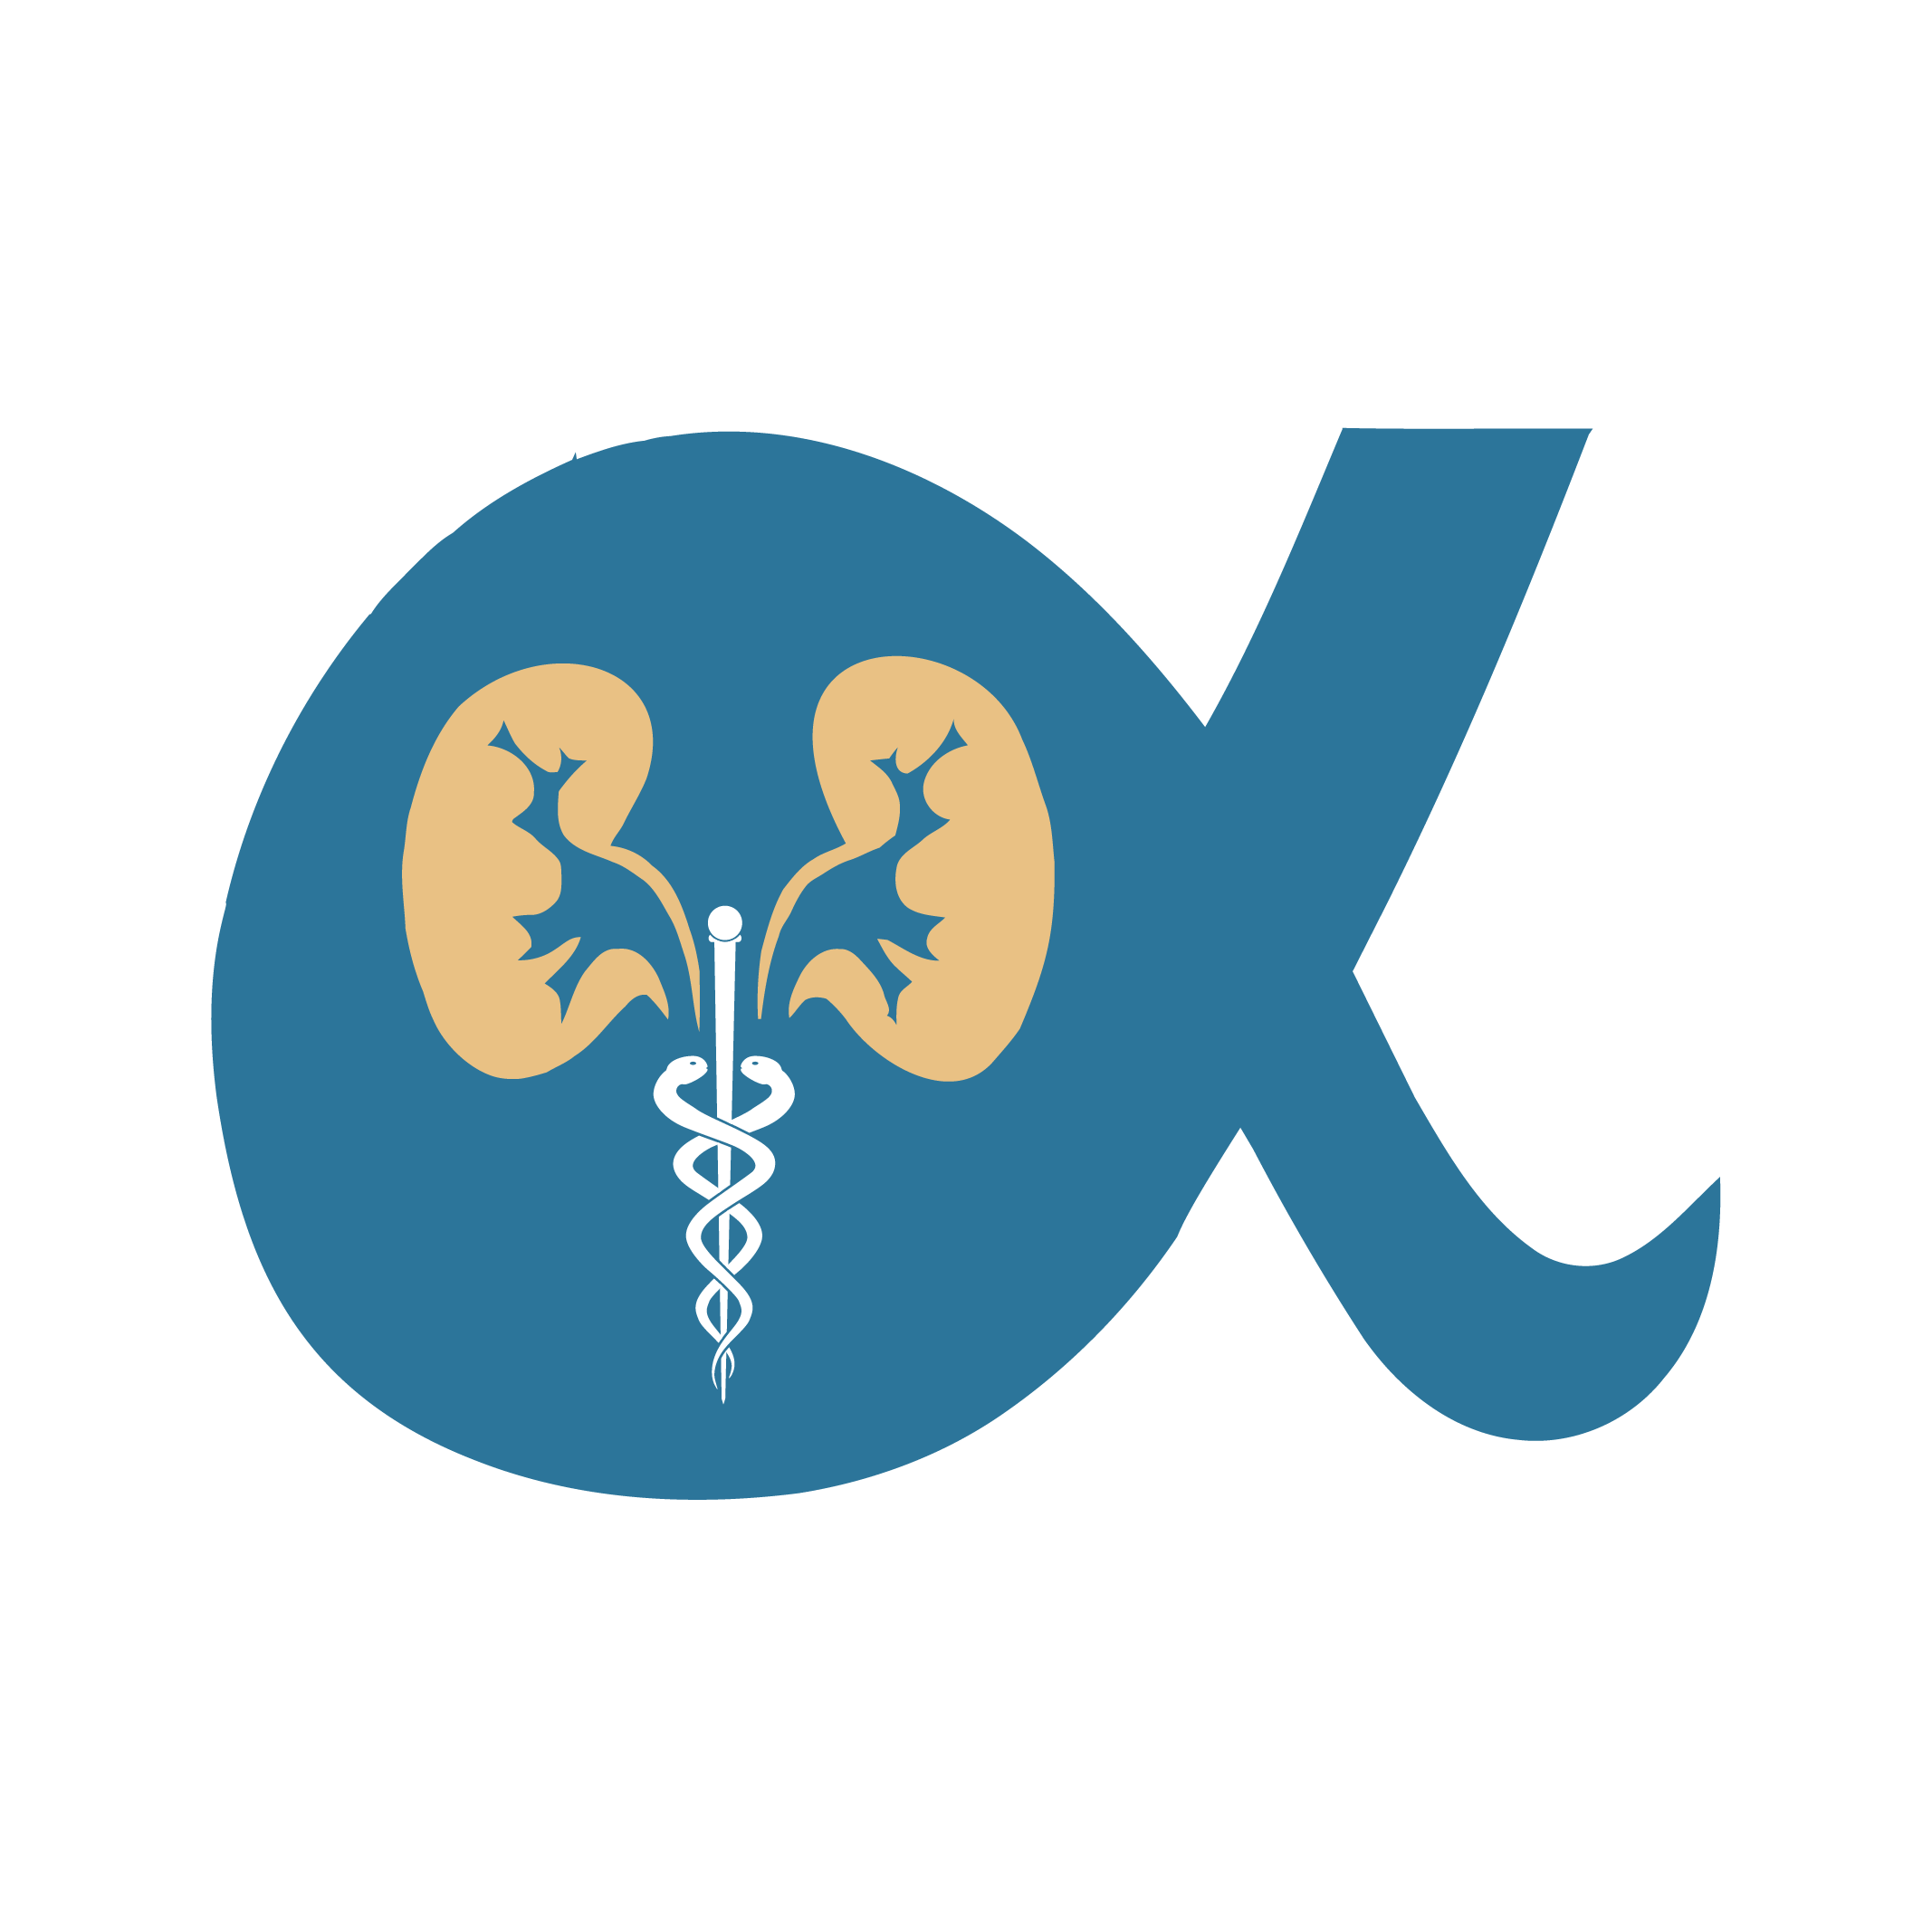 Alfa Kidney Care|Hospitals|Medical Services